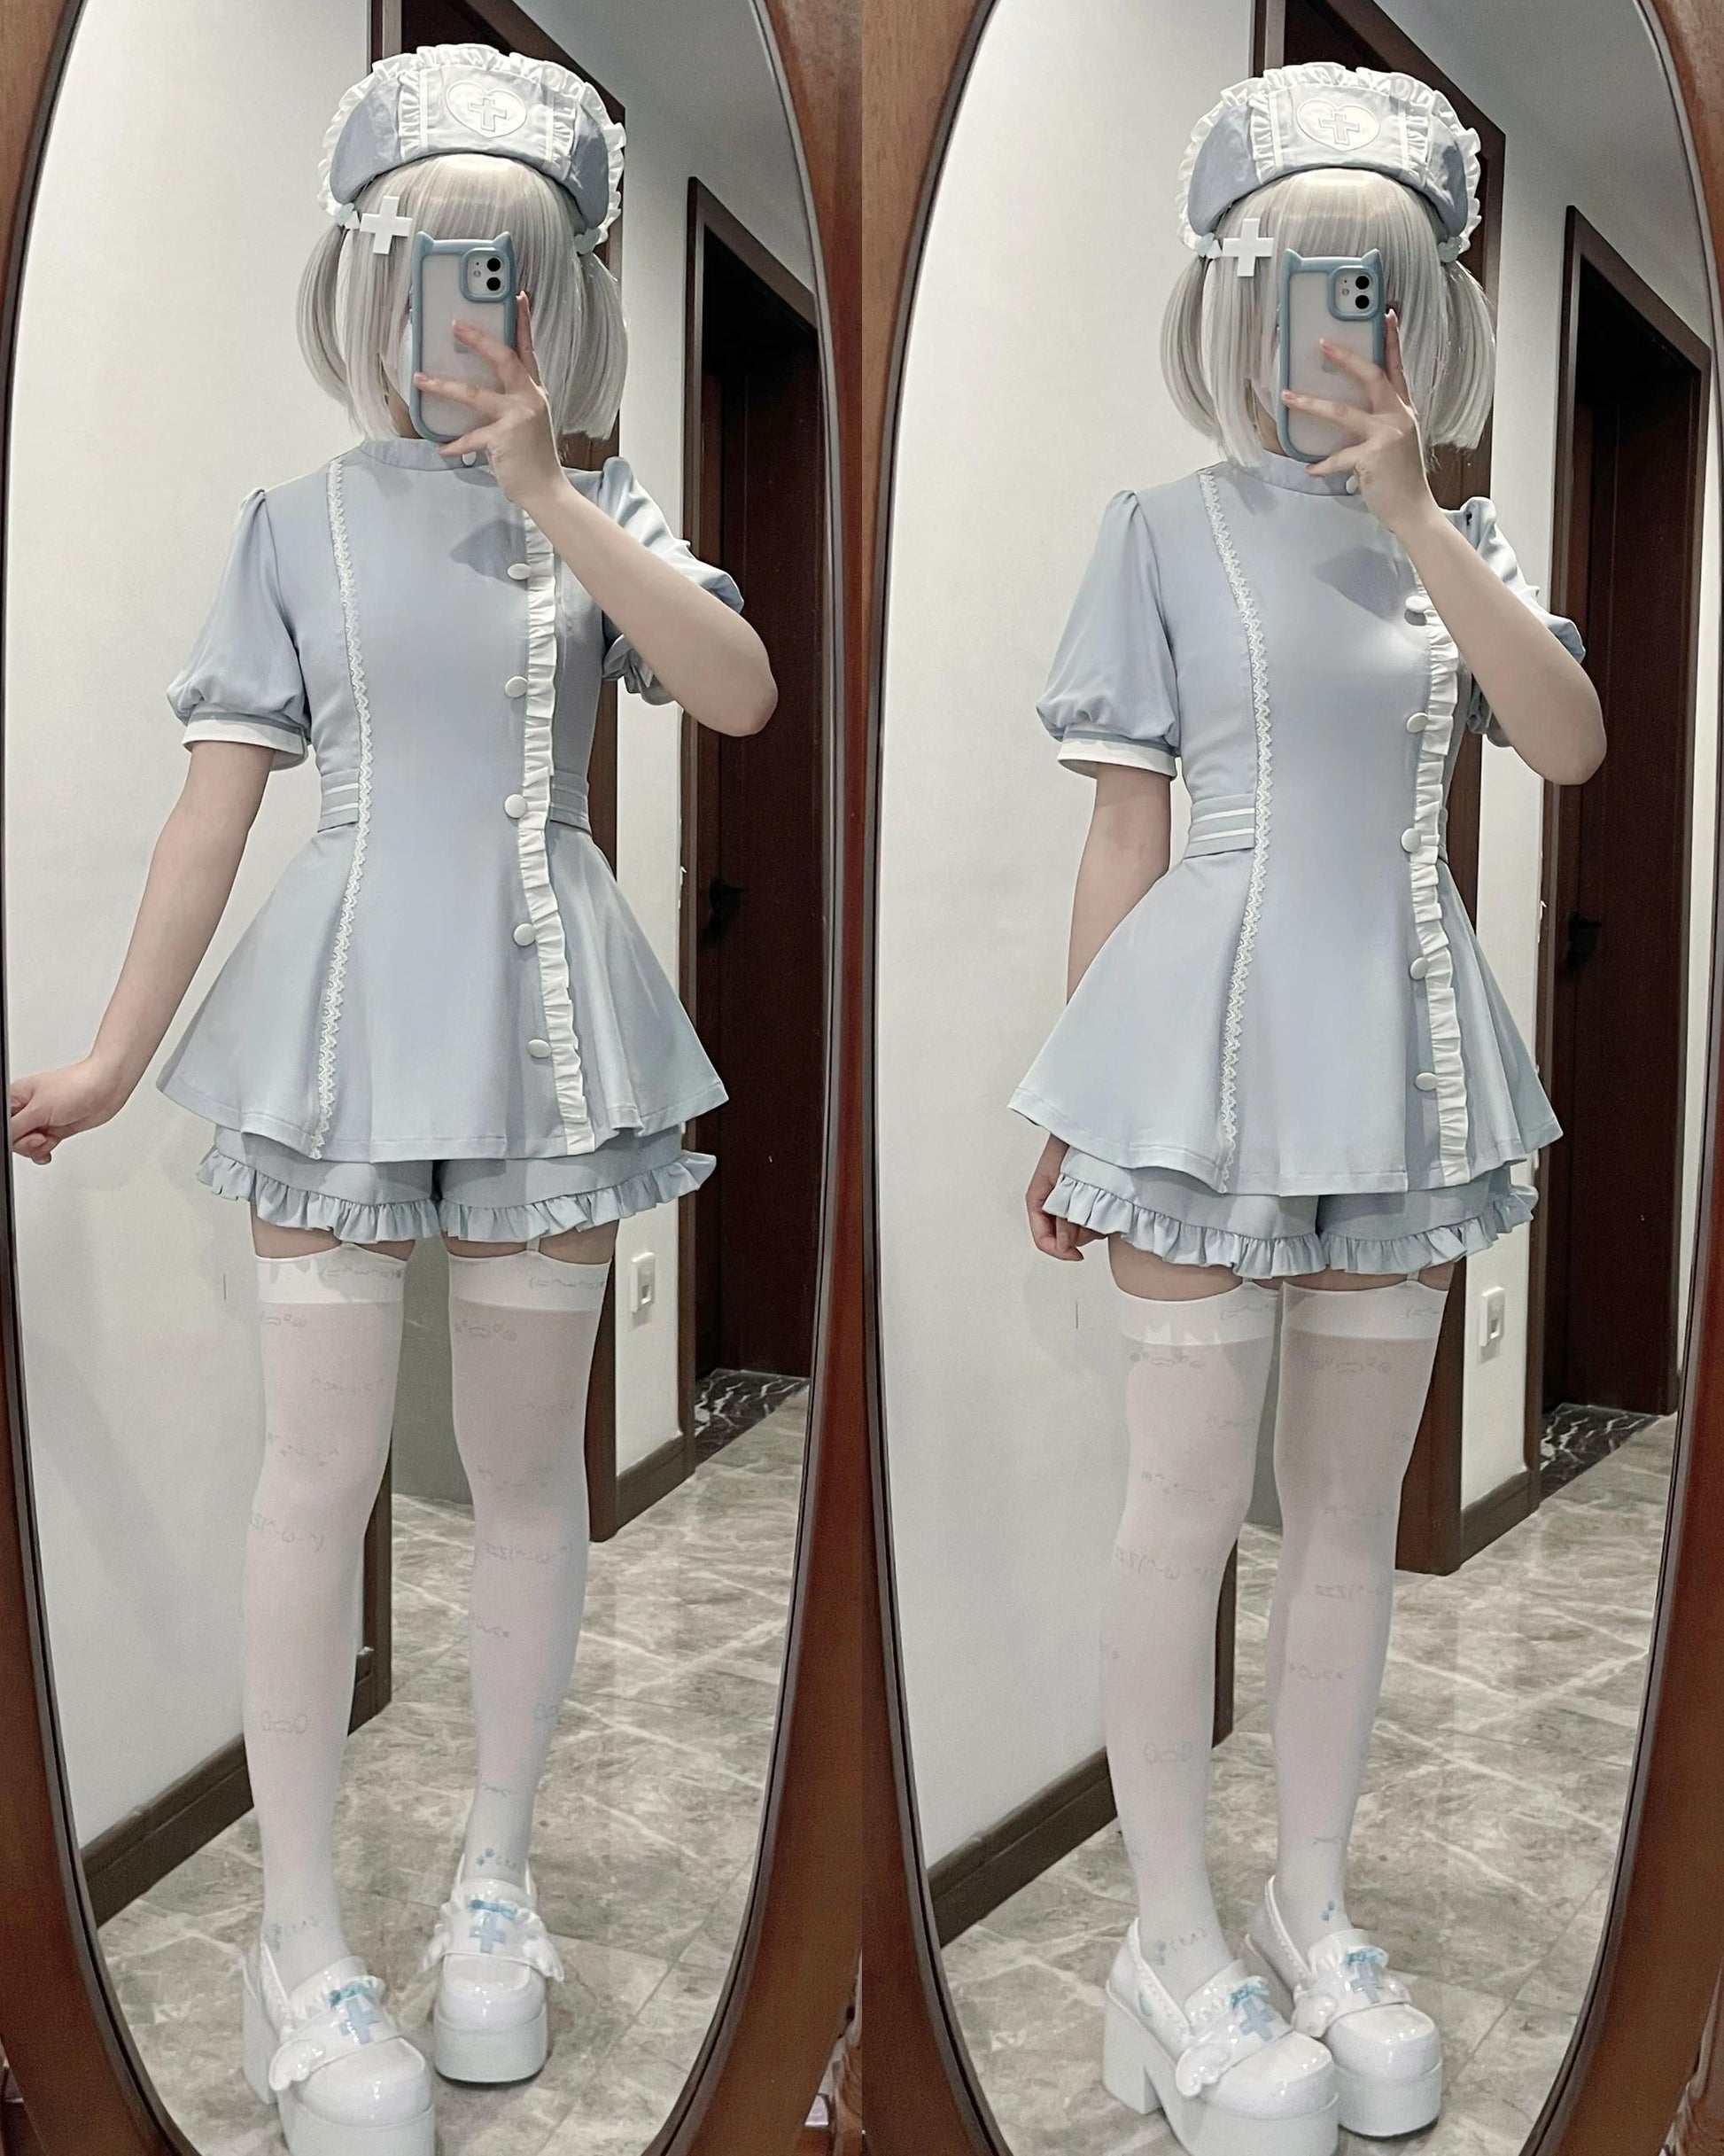 Tenshi Kaiwai Dress Set Nurse Medical Series Outfit Sets 37460:560292